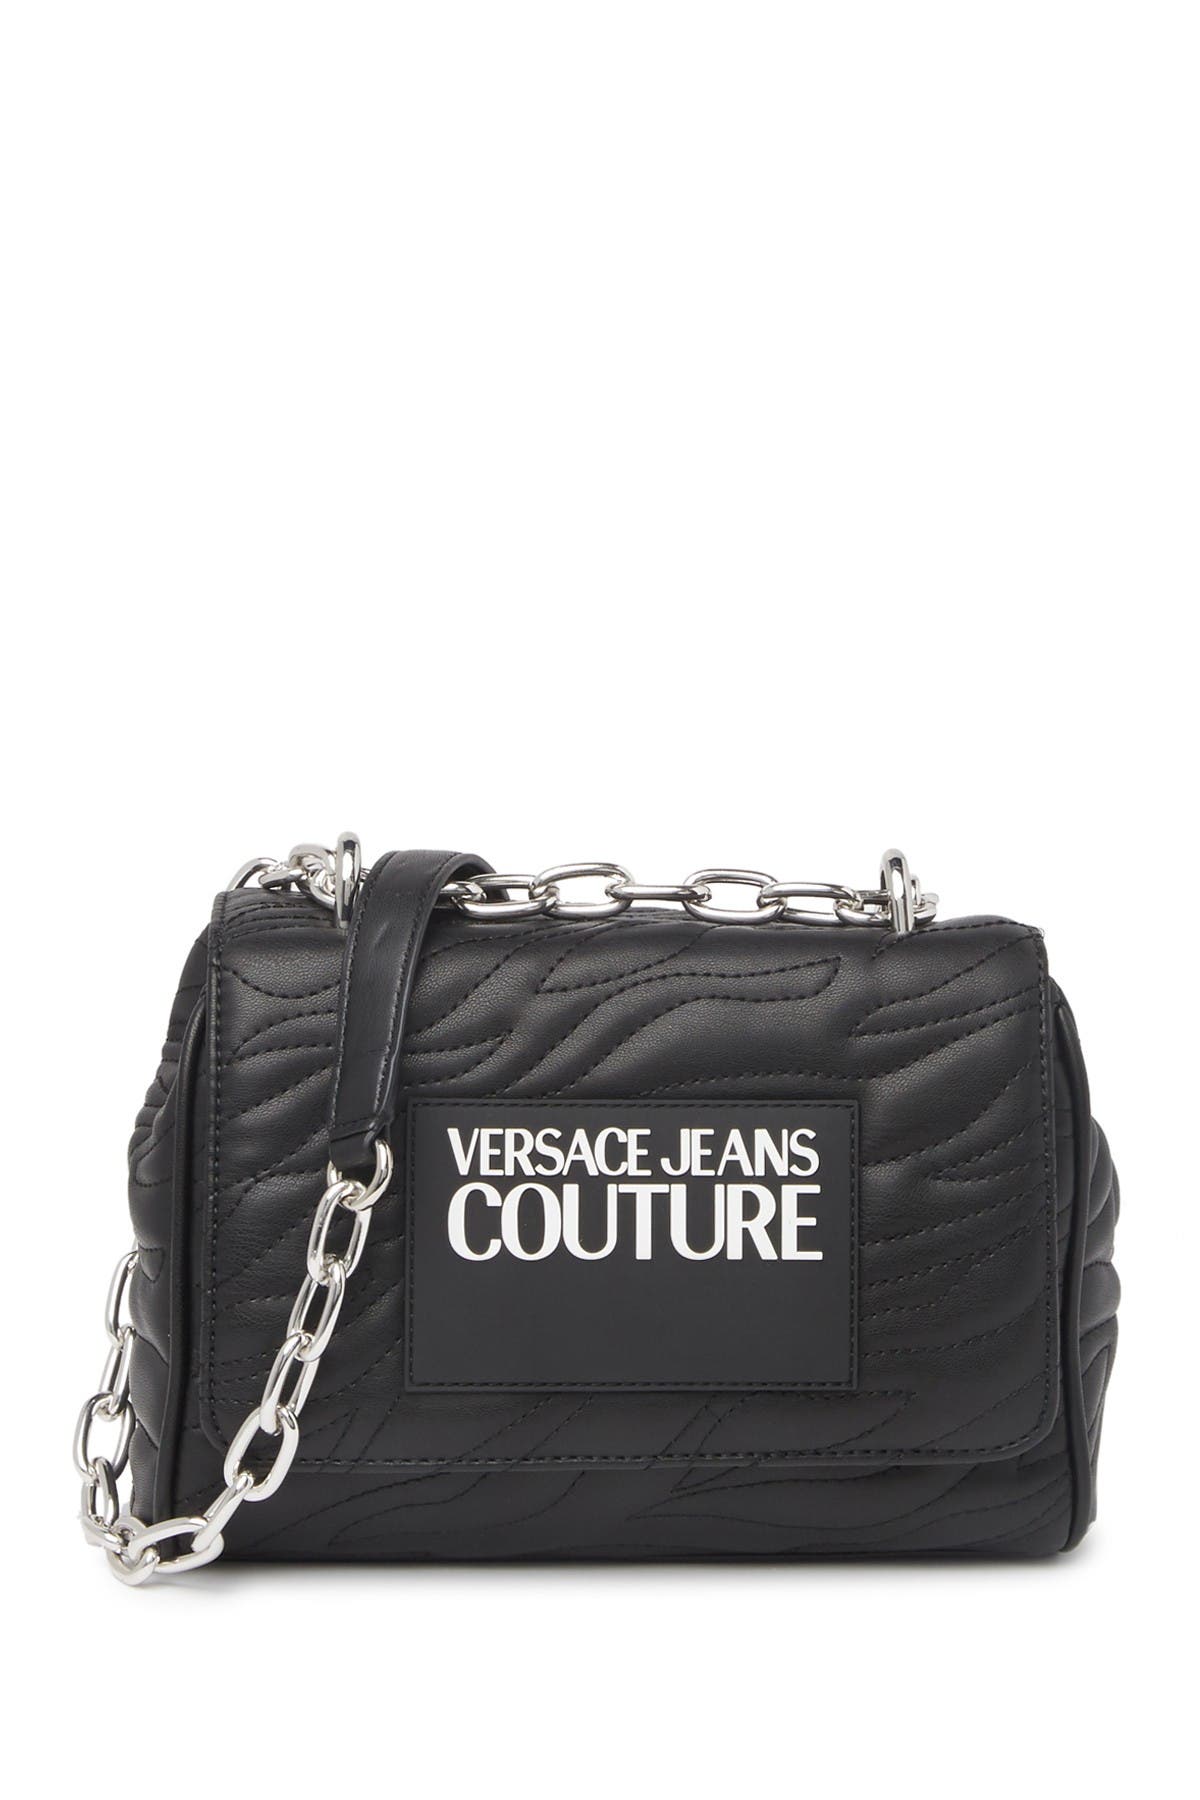 versace jeans crossbody bag